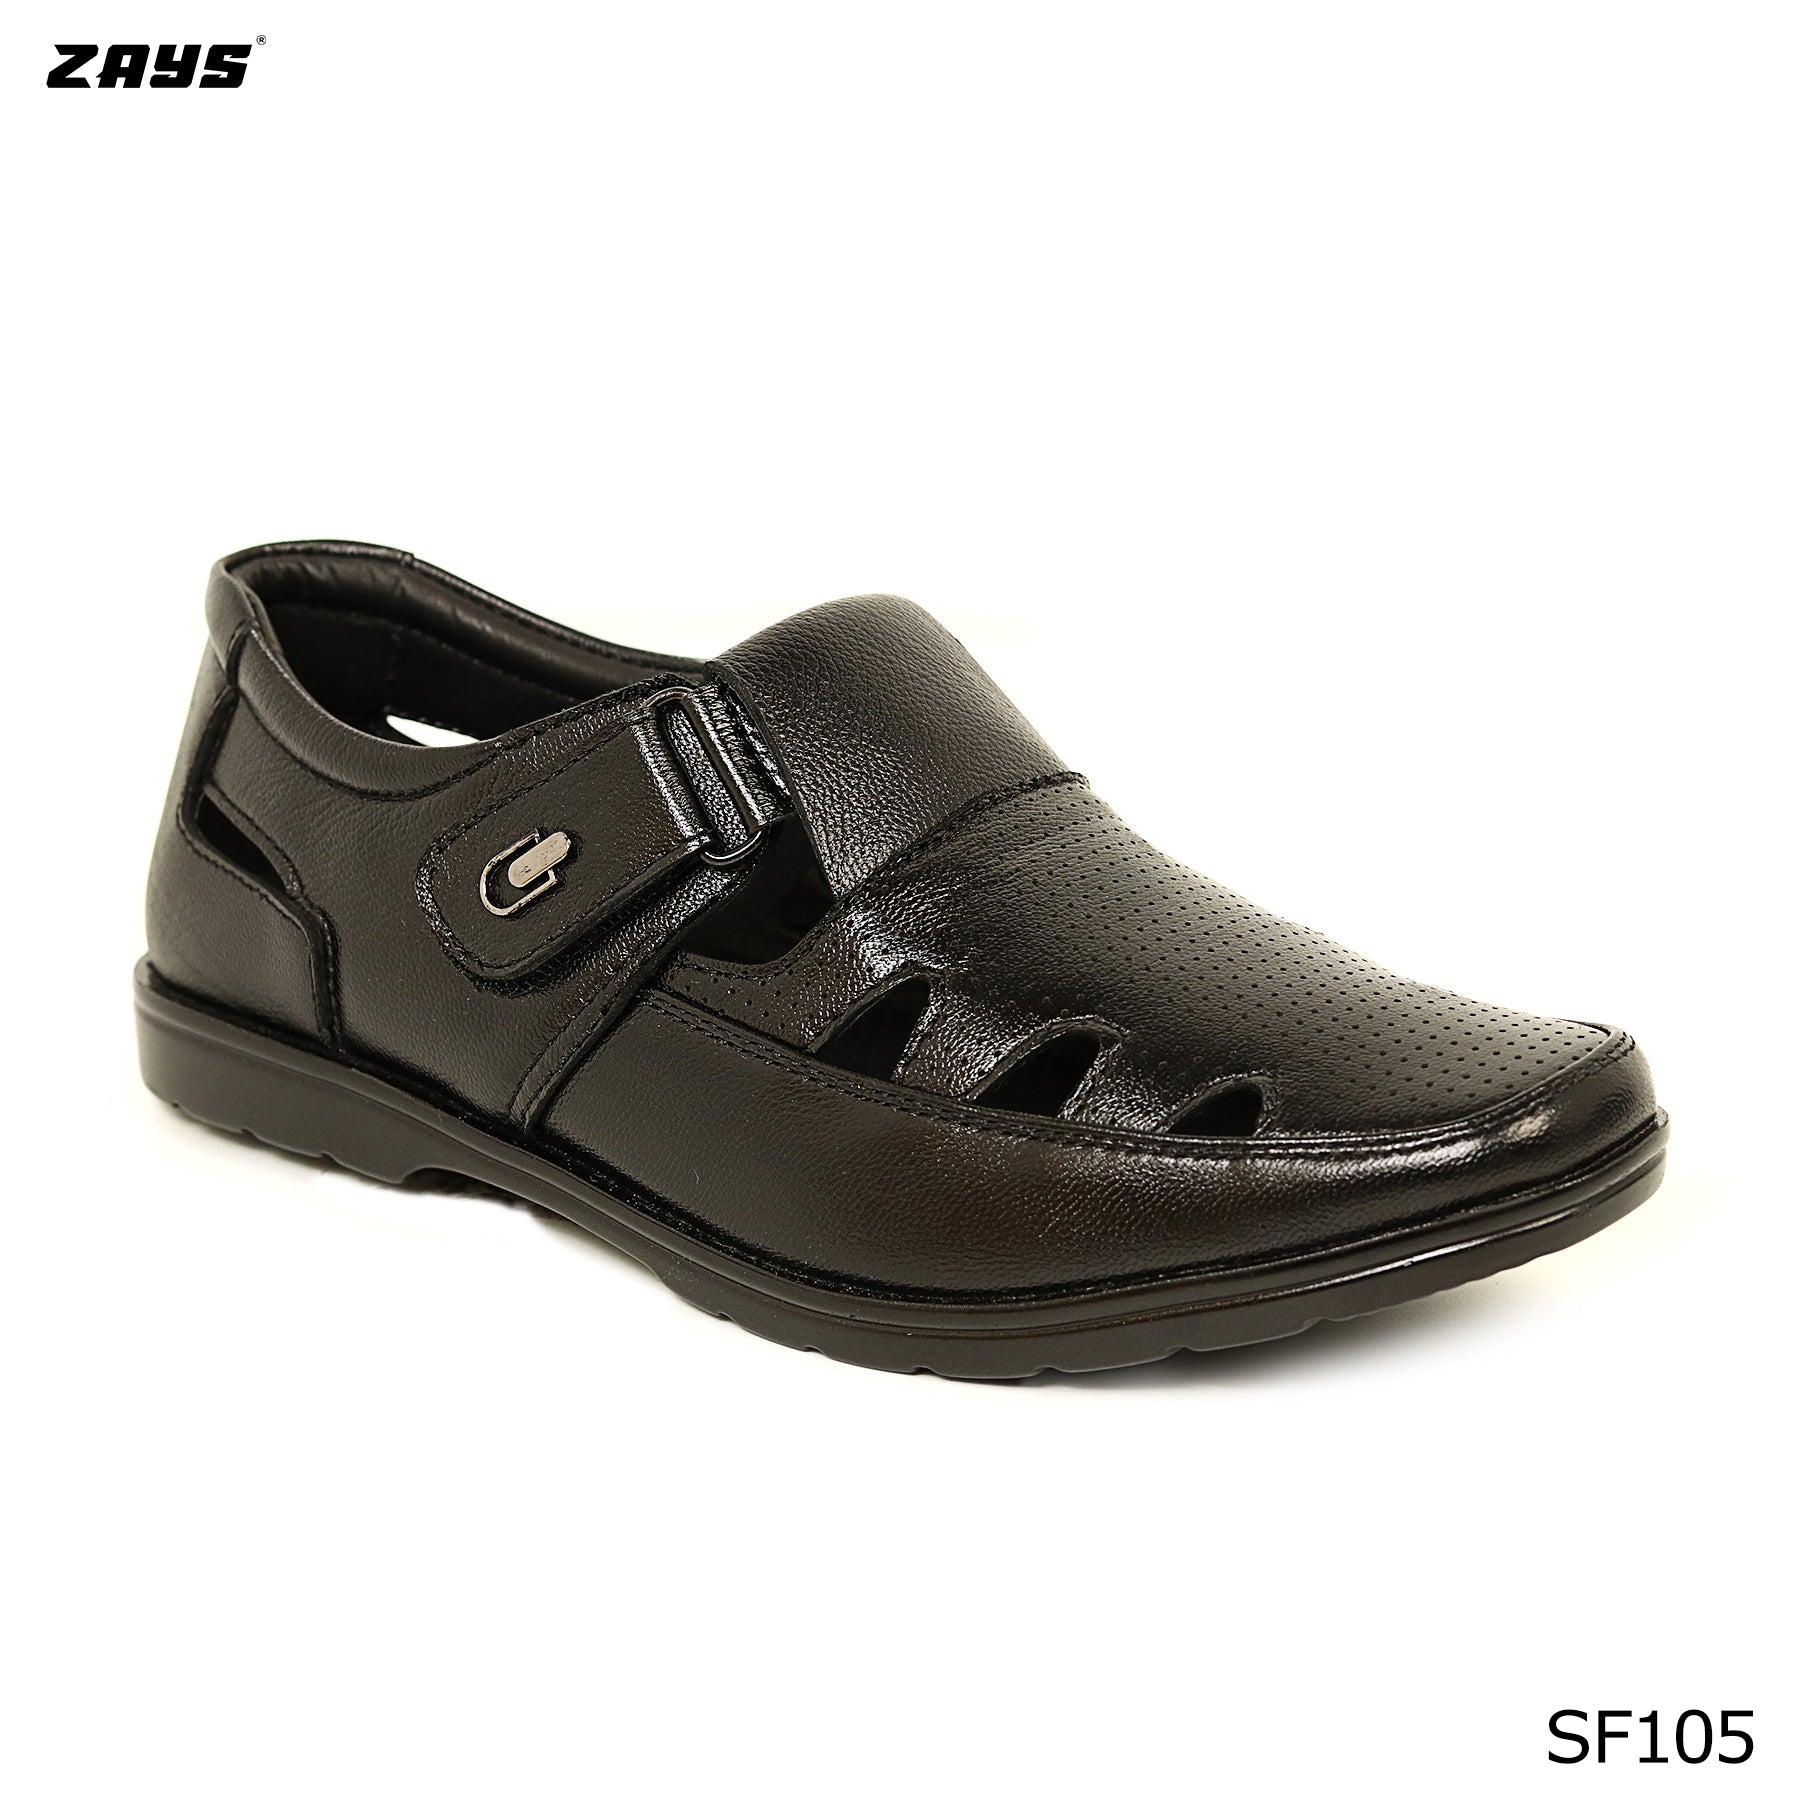 Zays Leather Premium Casual Shoe For Men (Black) - SF105